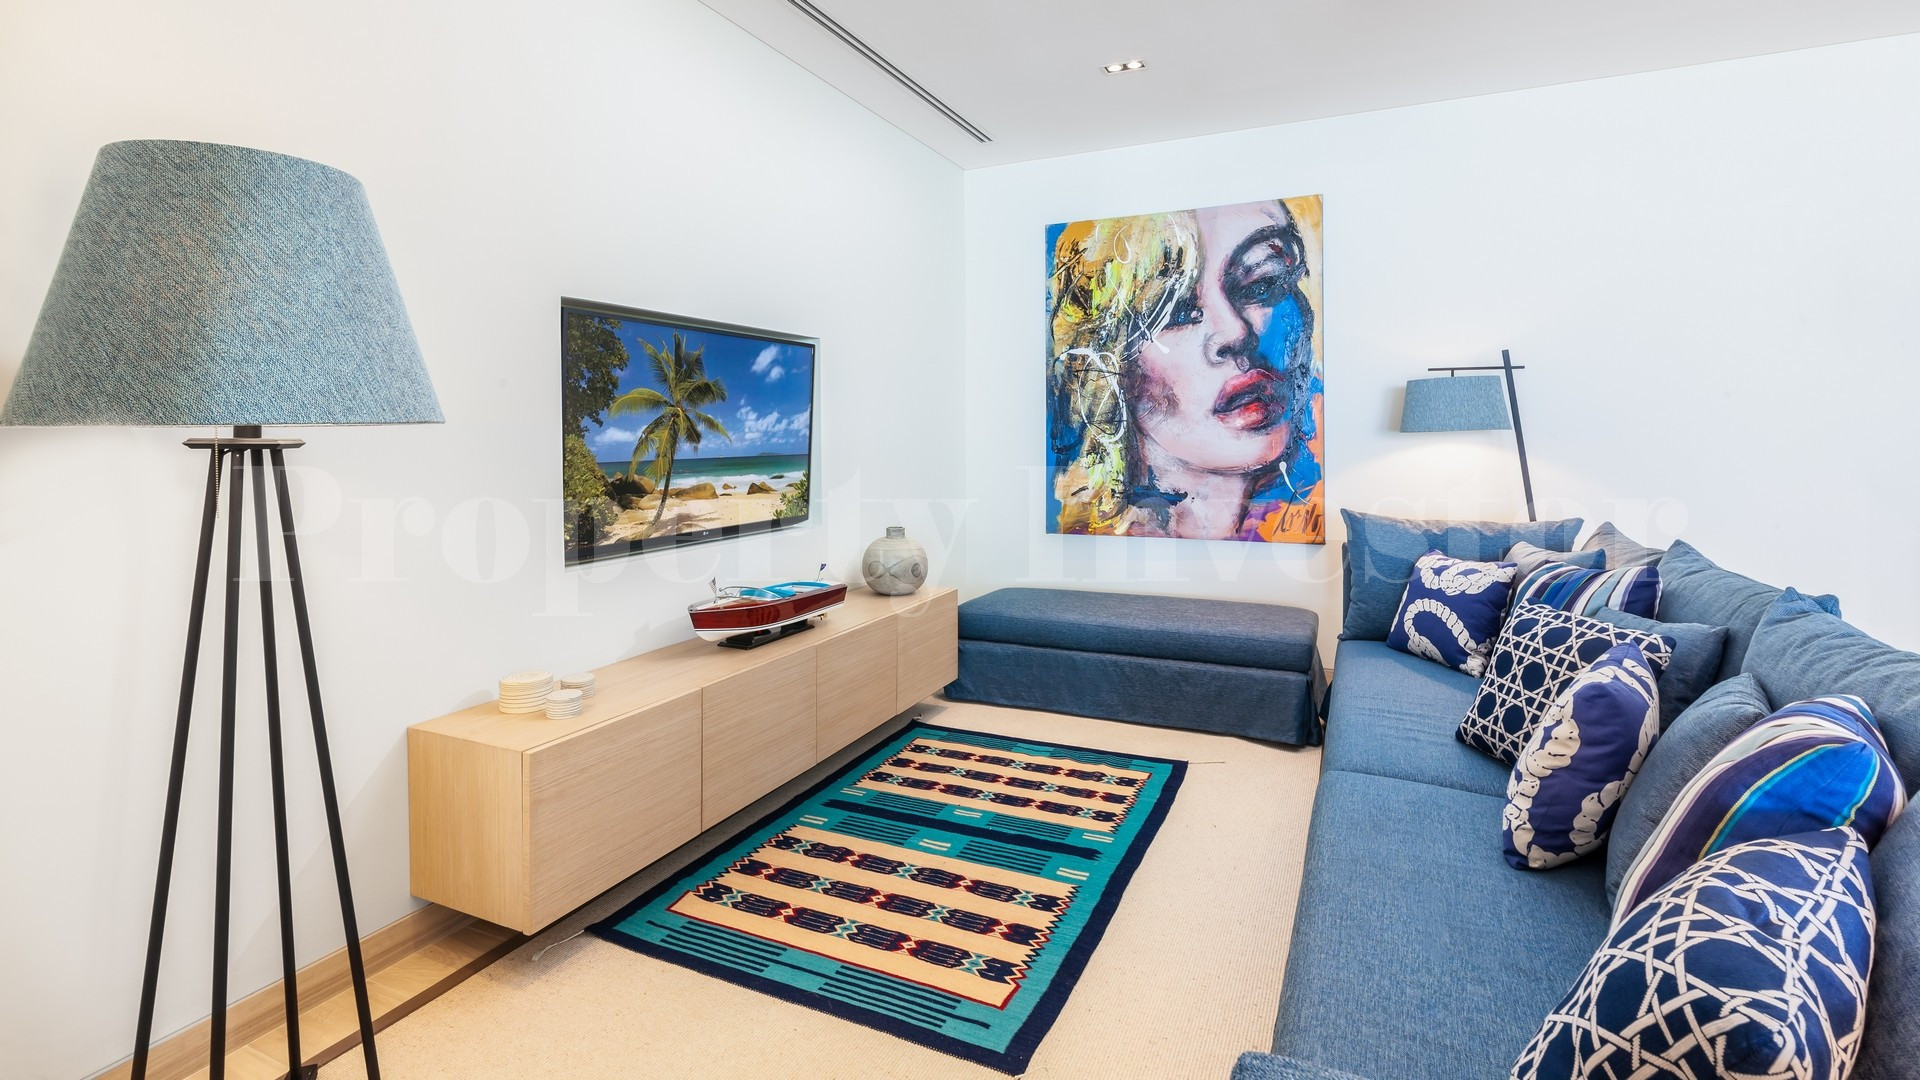 Gorgeous 5 Bedroom Private Luxury Designer Beachfront Villa for Sale in Cape Yamu, Phuket